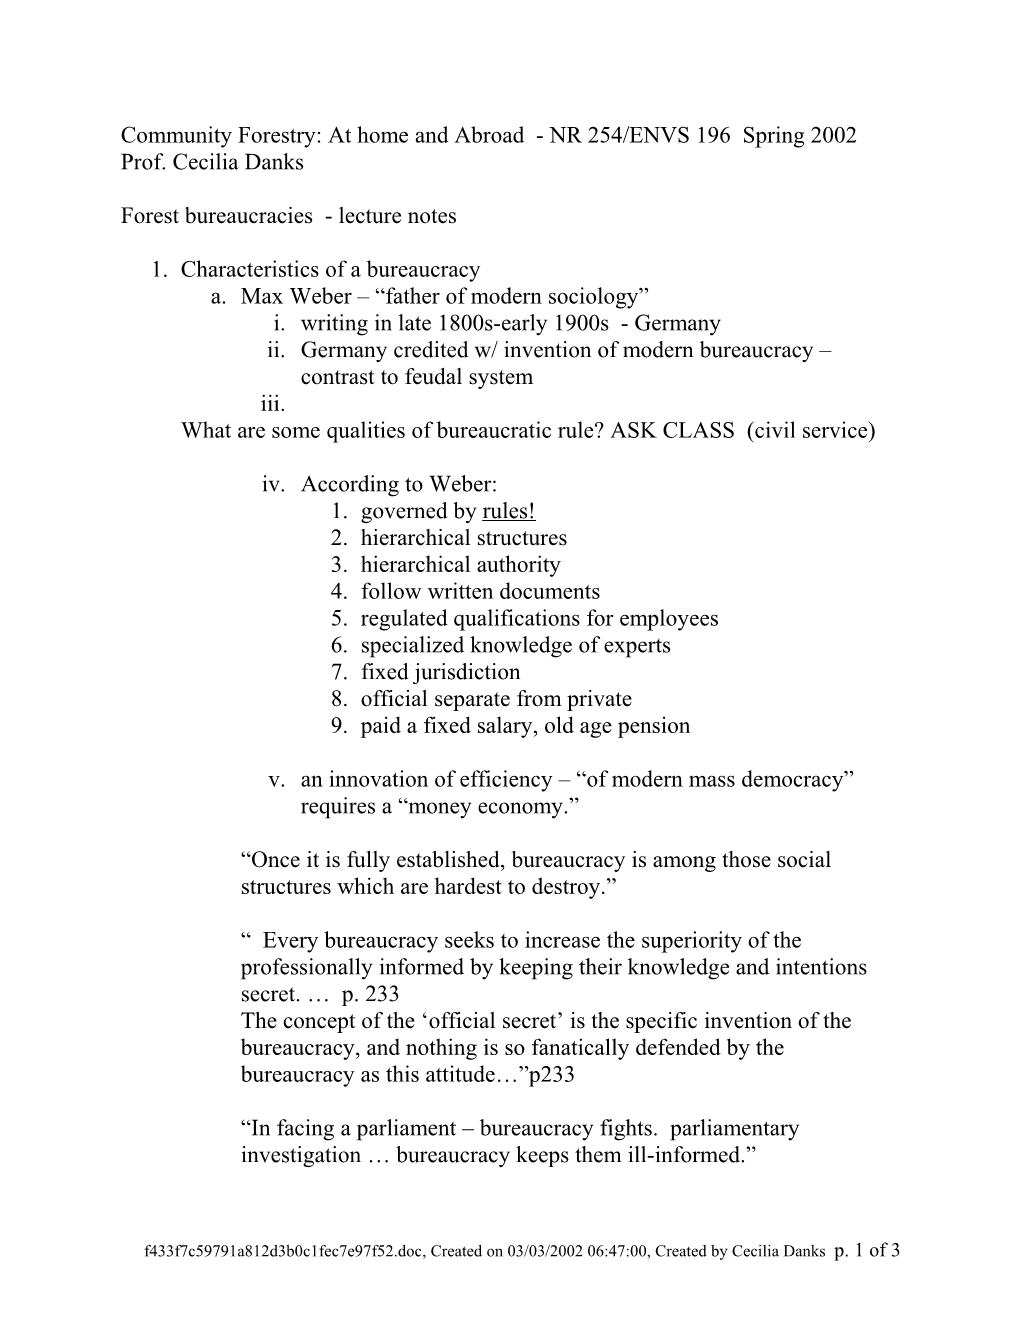 Forest Bureaucracies - Lecture Notes